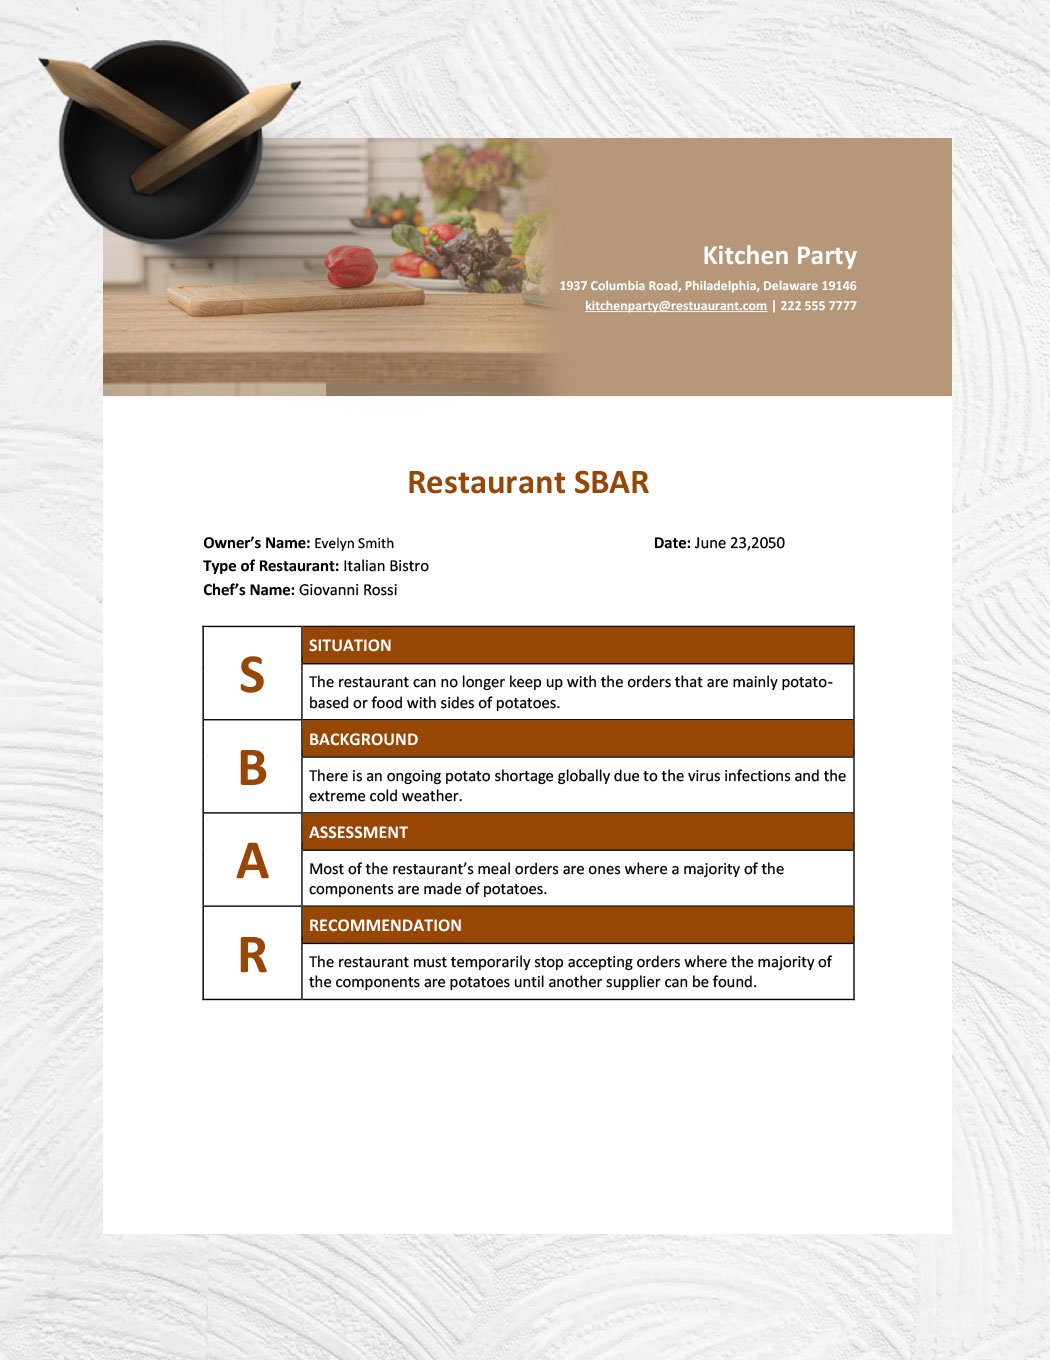 Restaurant SBAR Template